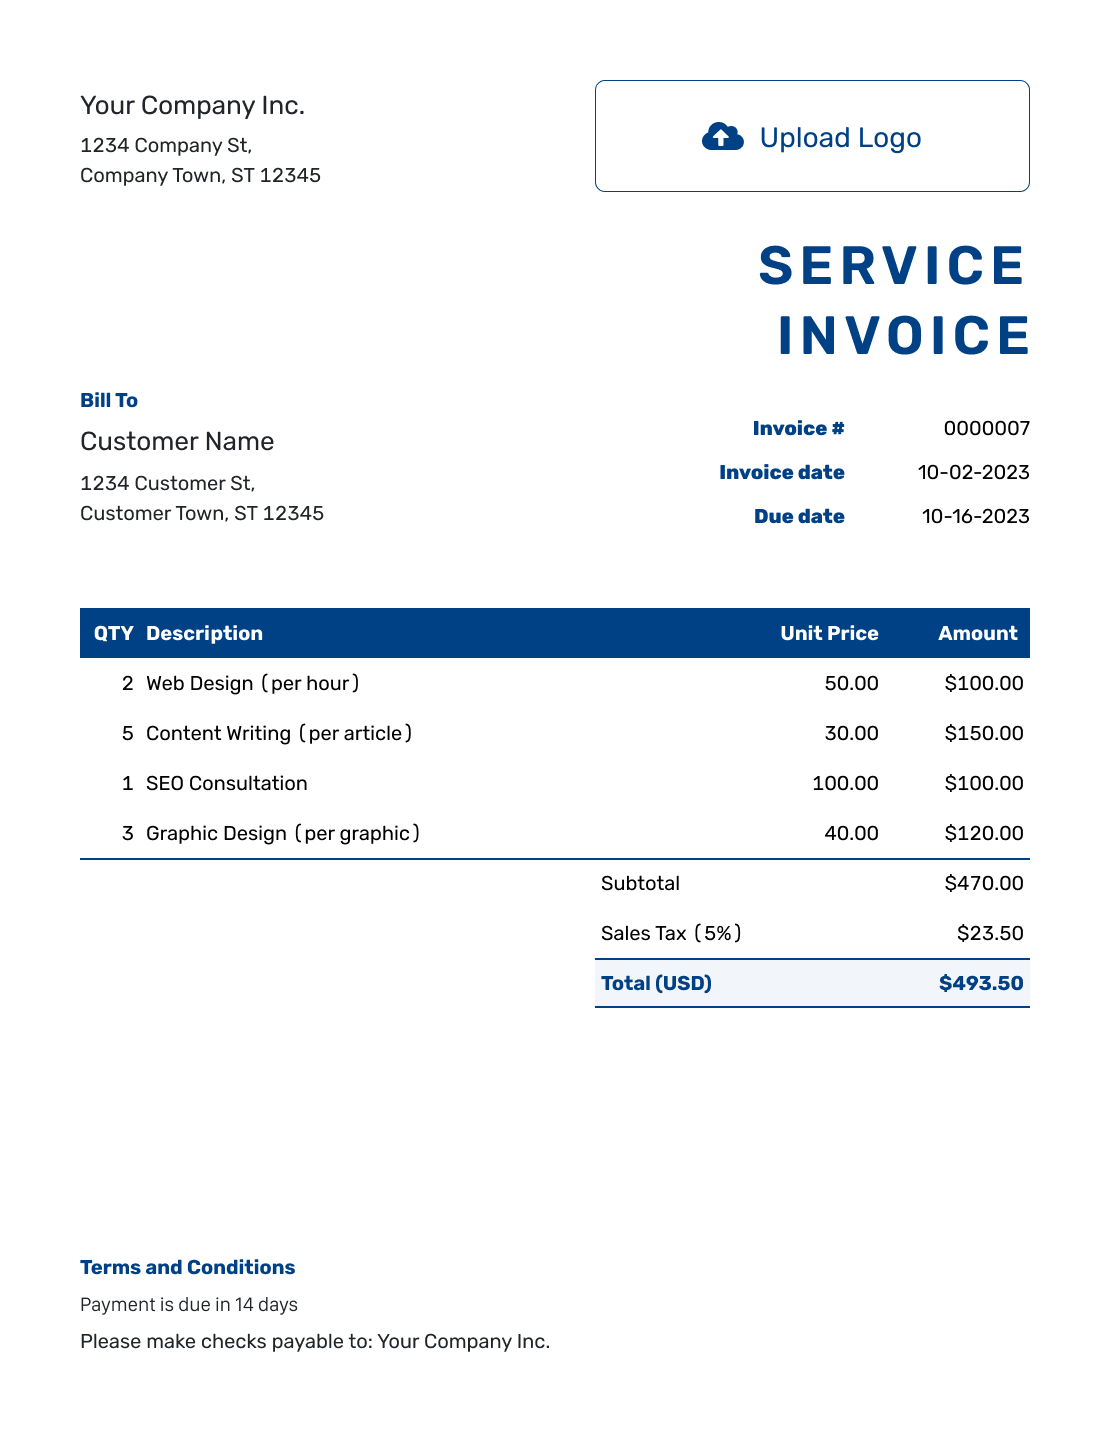 Sample Service Invoice Template